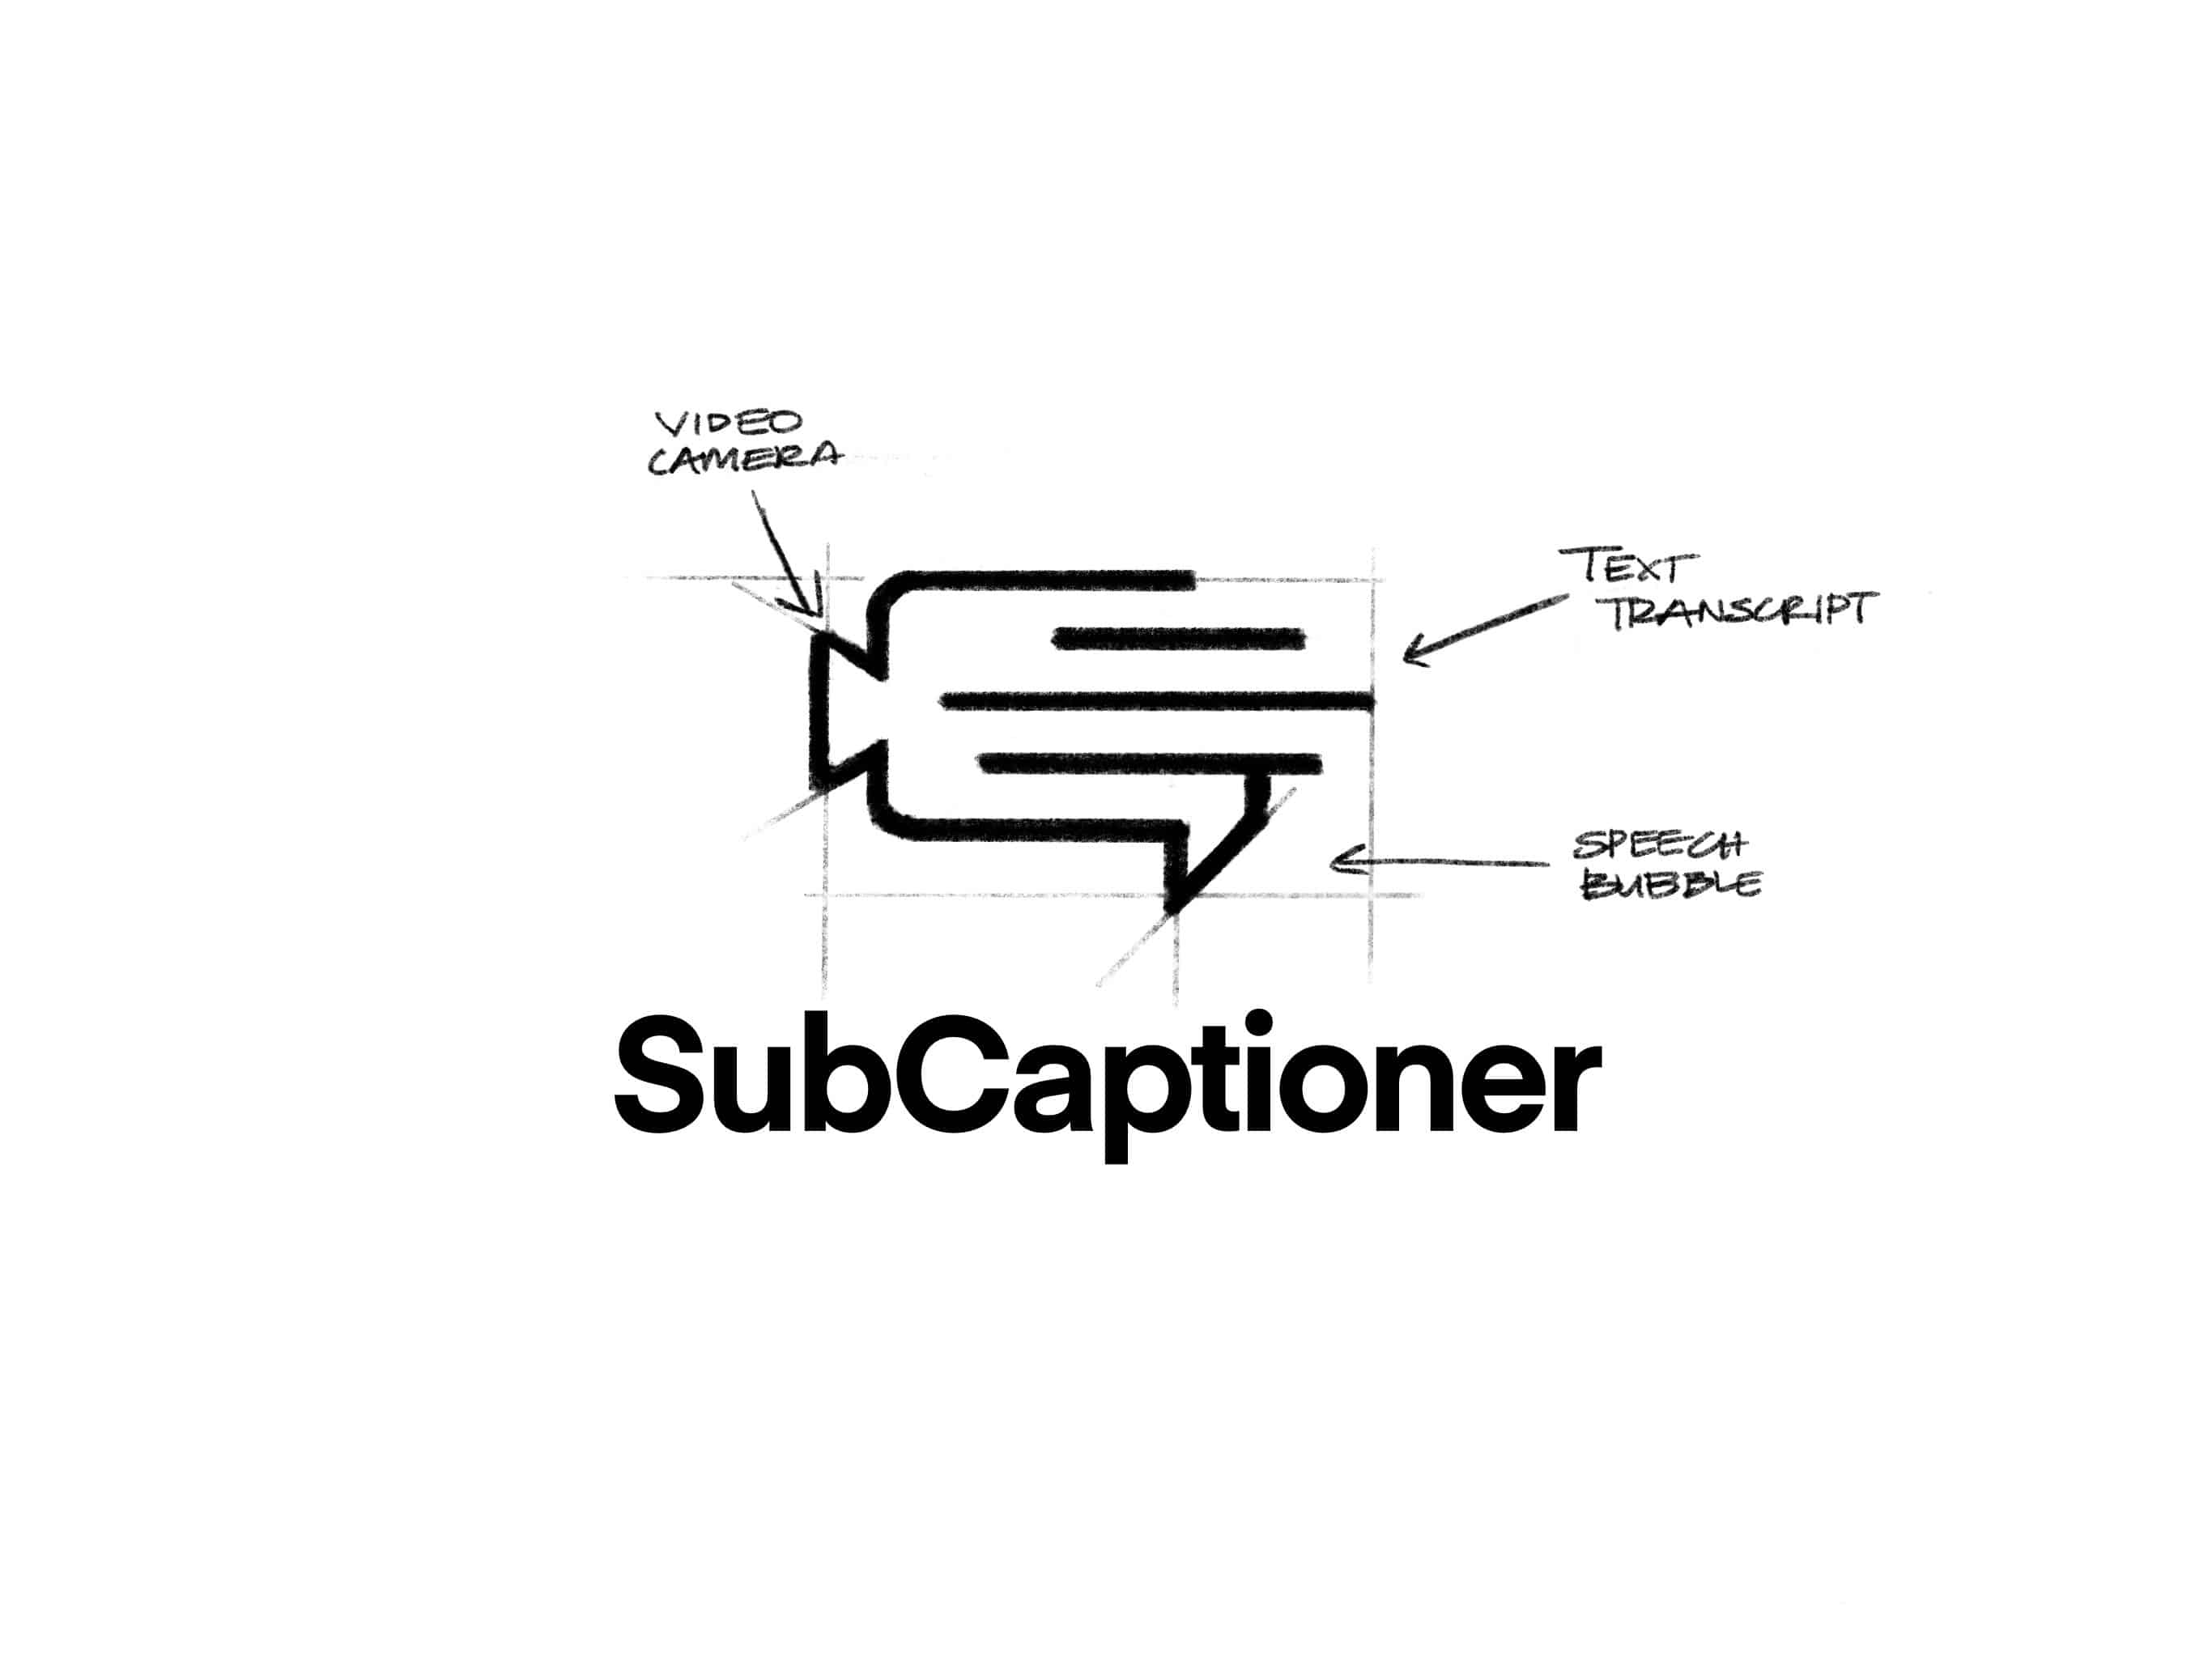 SubCaptioner early logo sketch concept - video camera